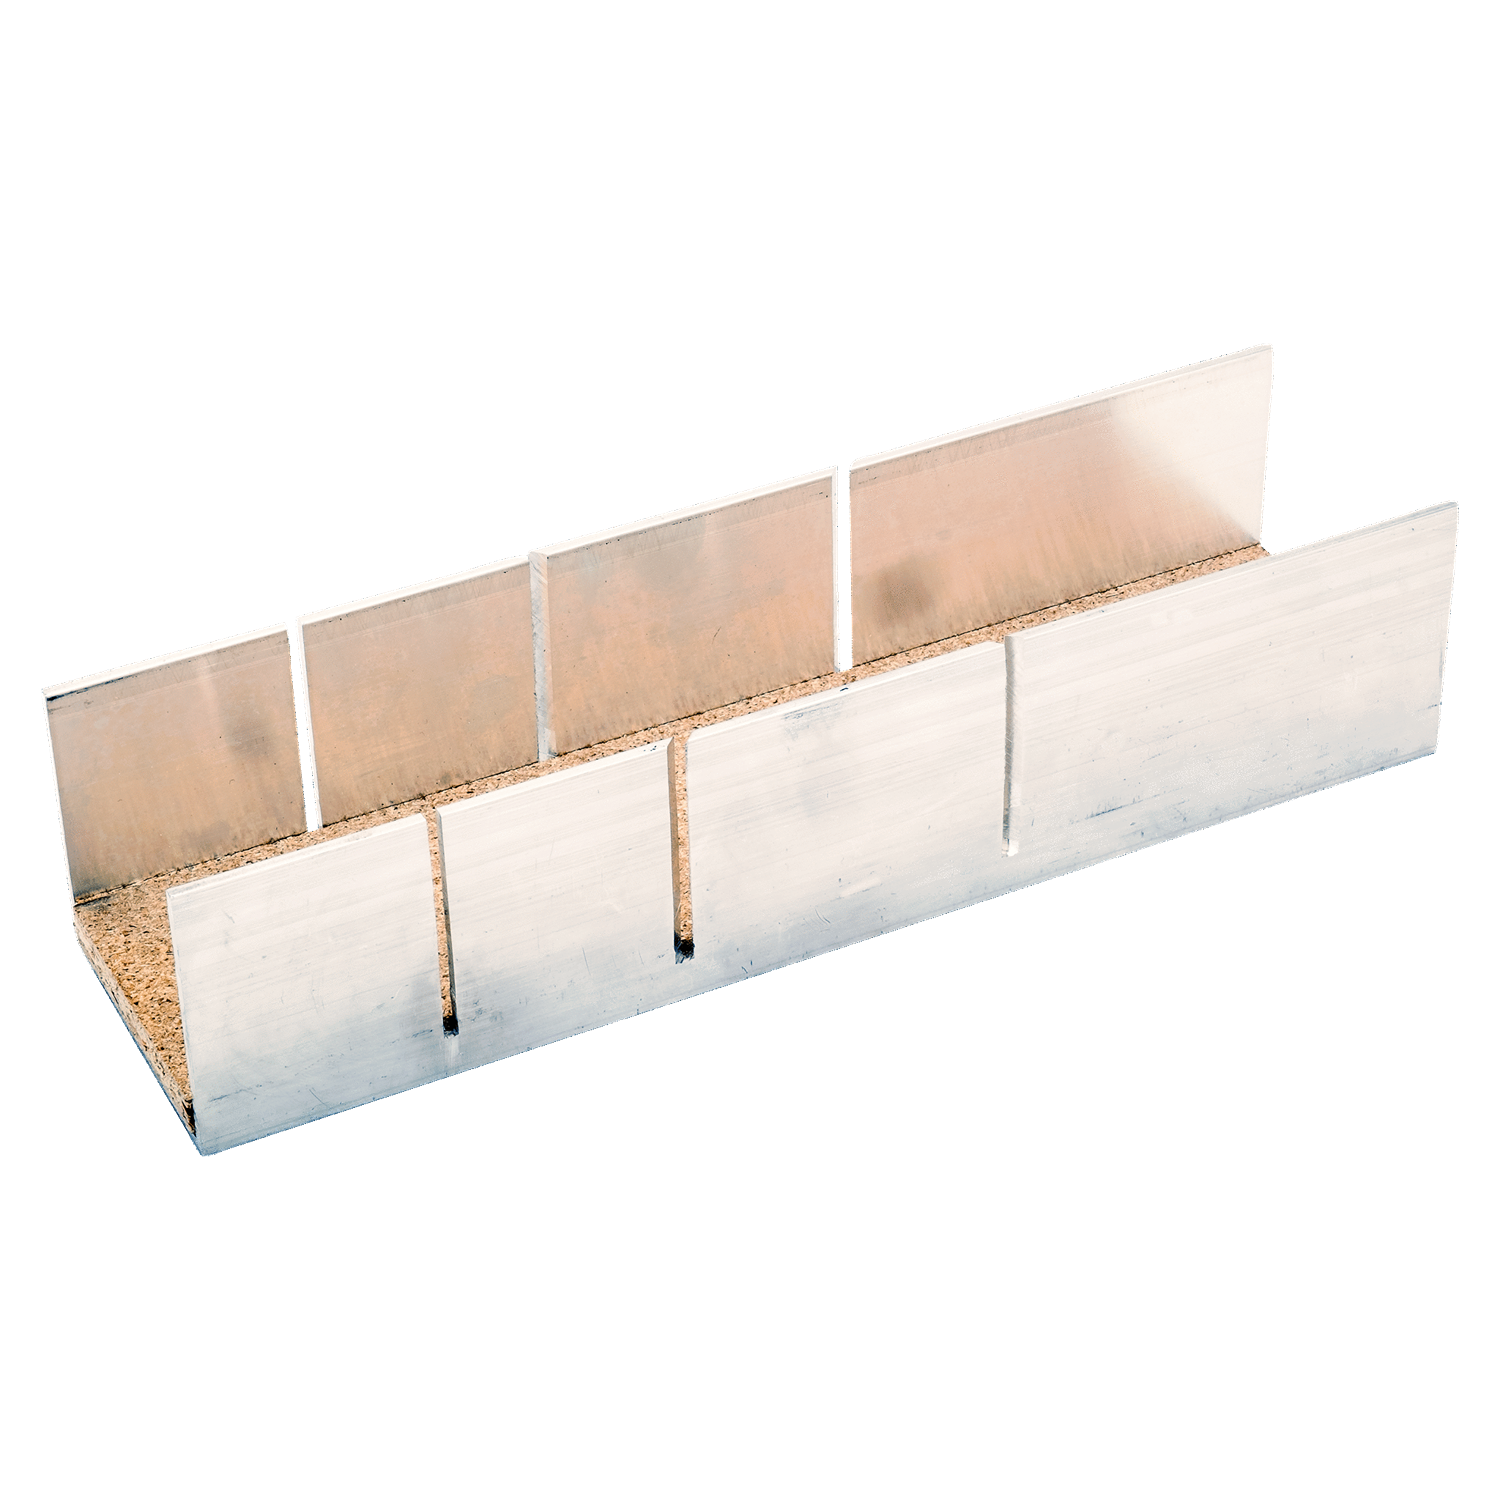 BAHCO 234-A Aluminium Wood Mitre Boxes (BAHCO Tools) - Premium Wood Mitre Boxes from BAHCO - Shop now at Yew Aik.